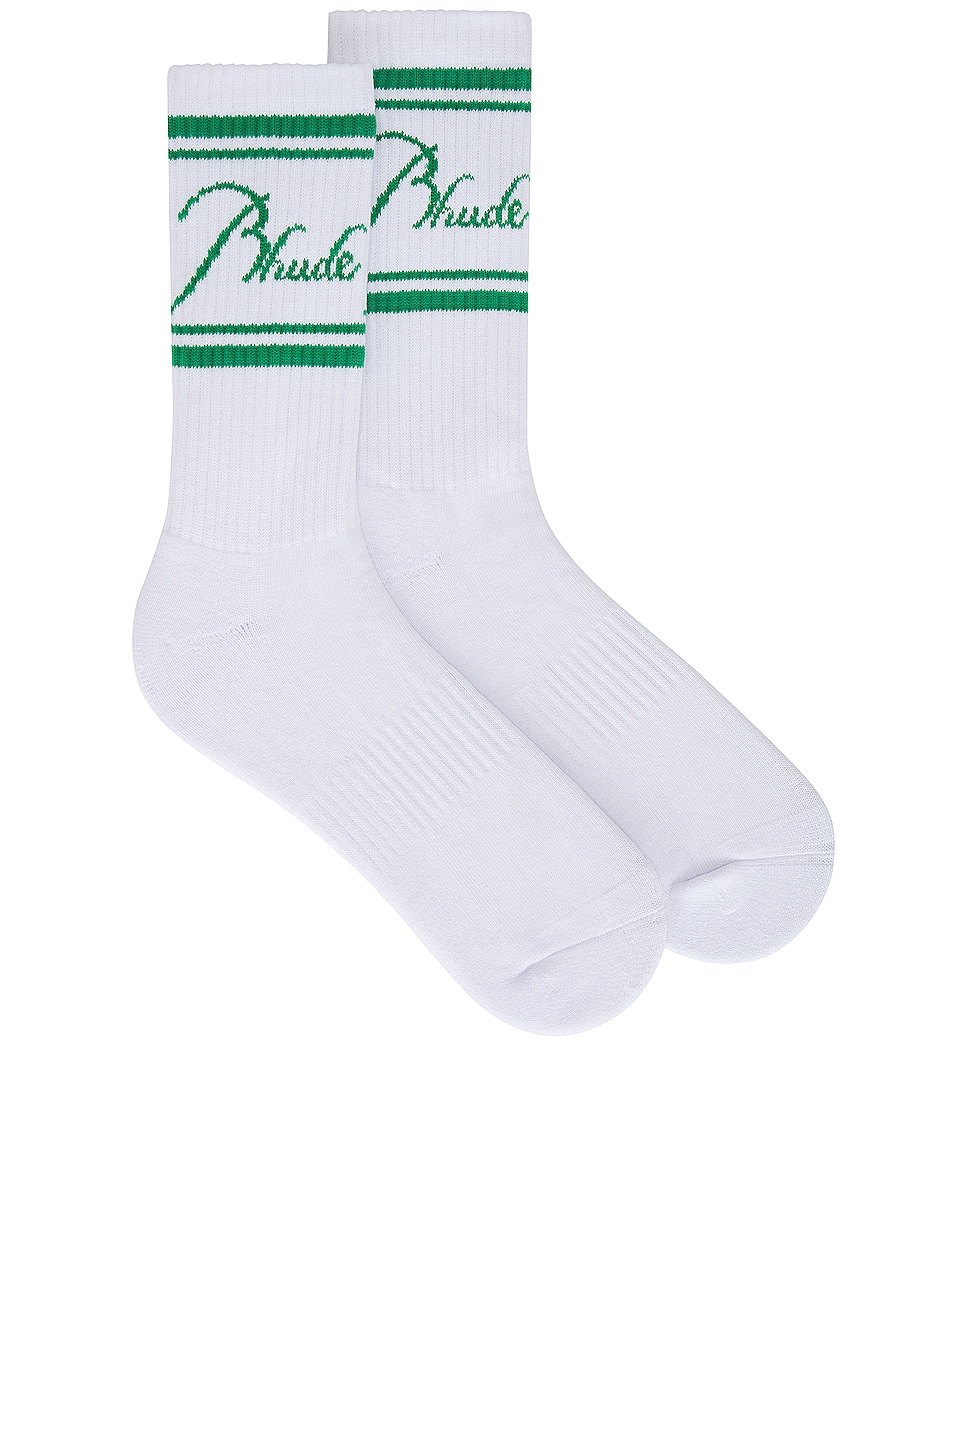 Rhude Script Logo Socks in White